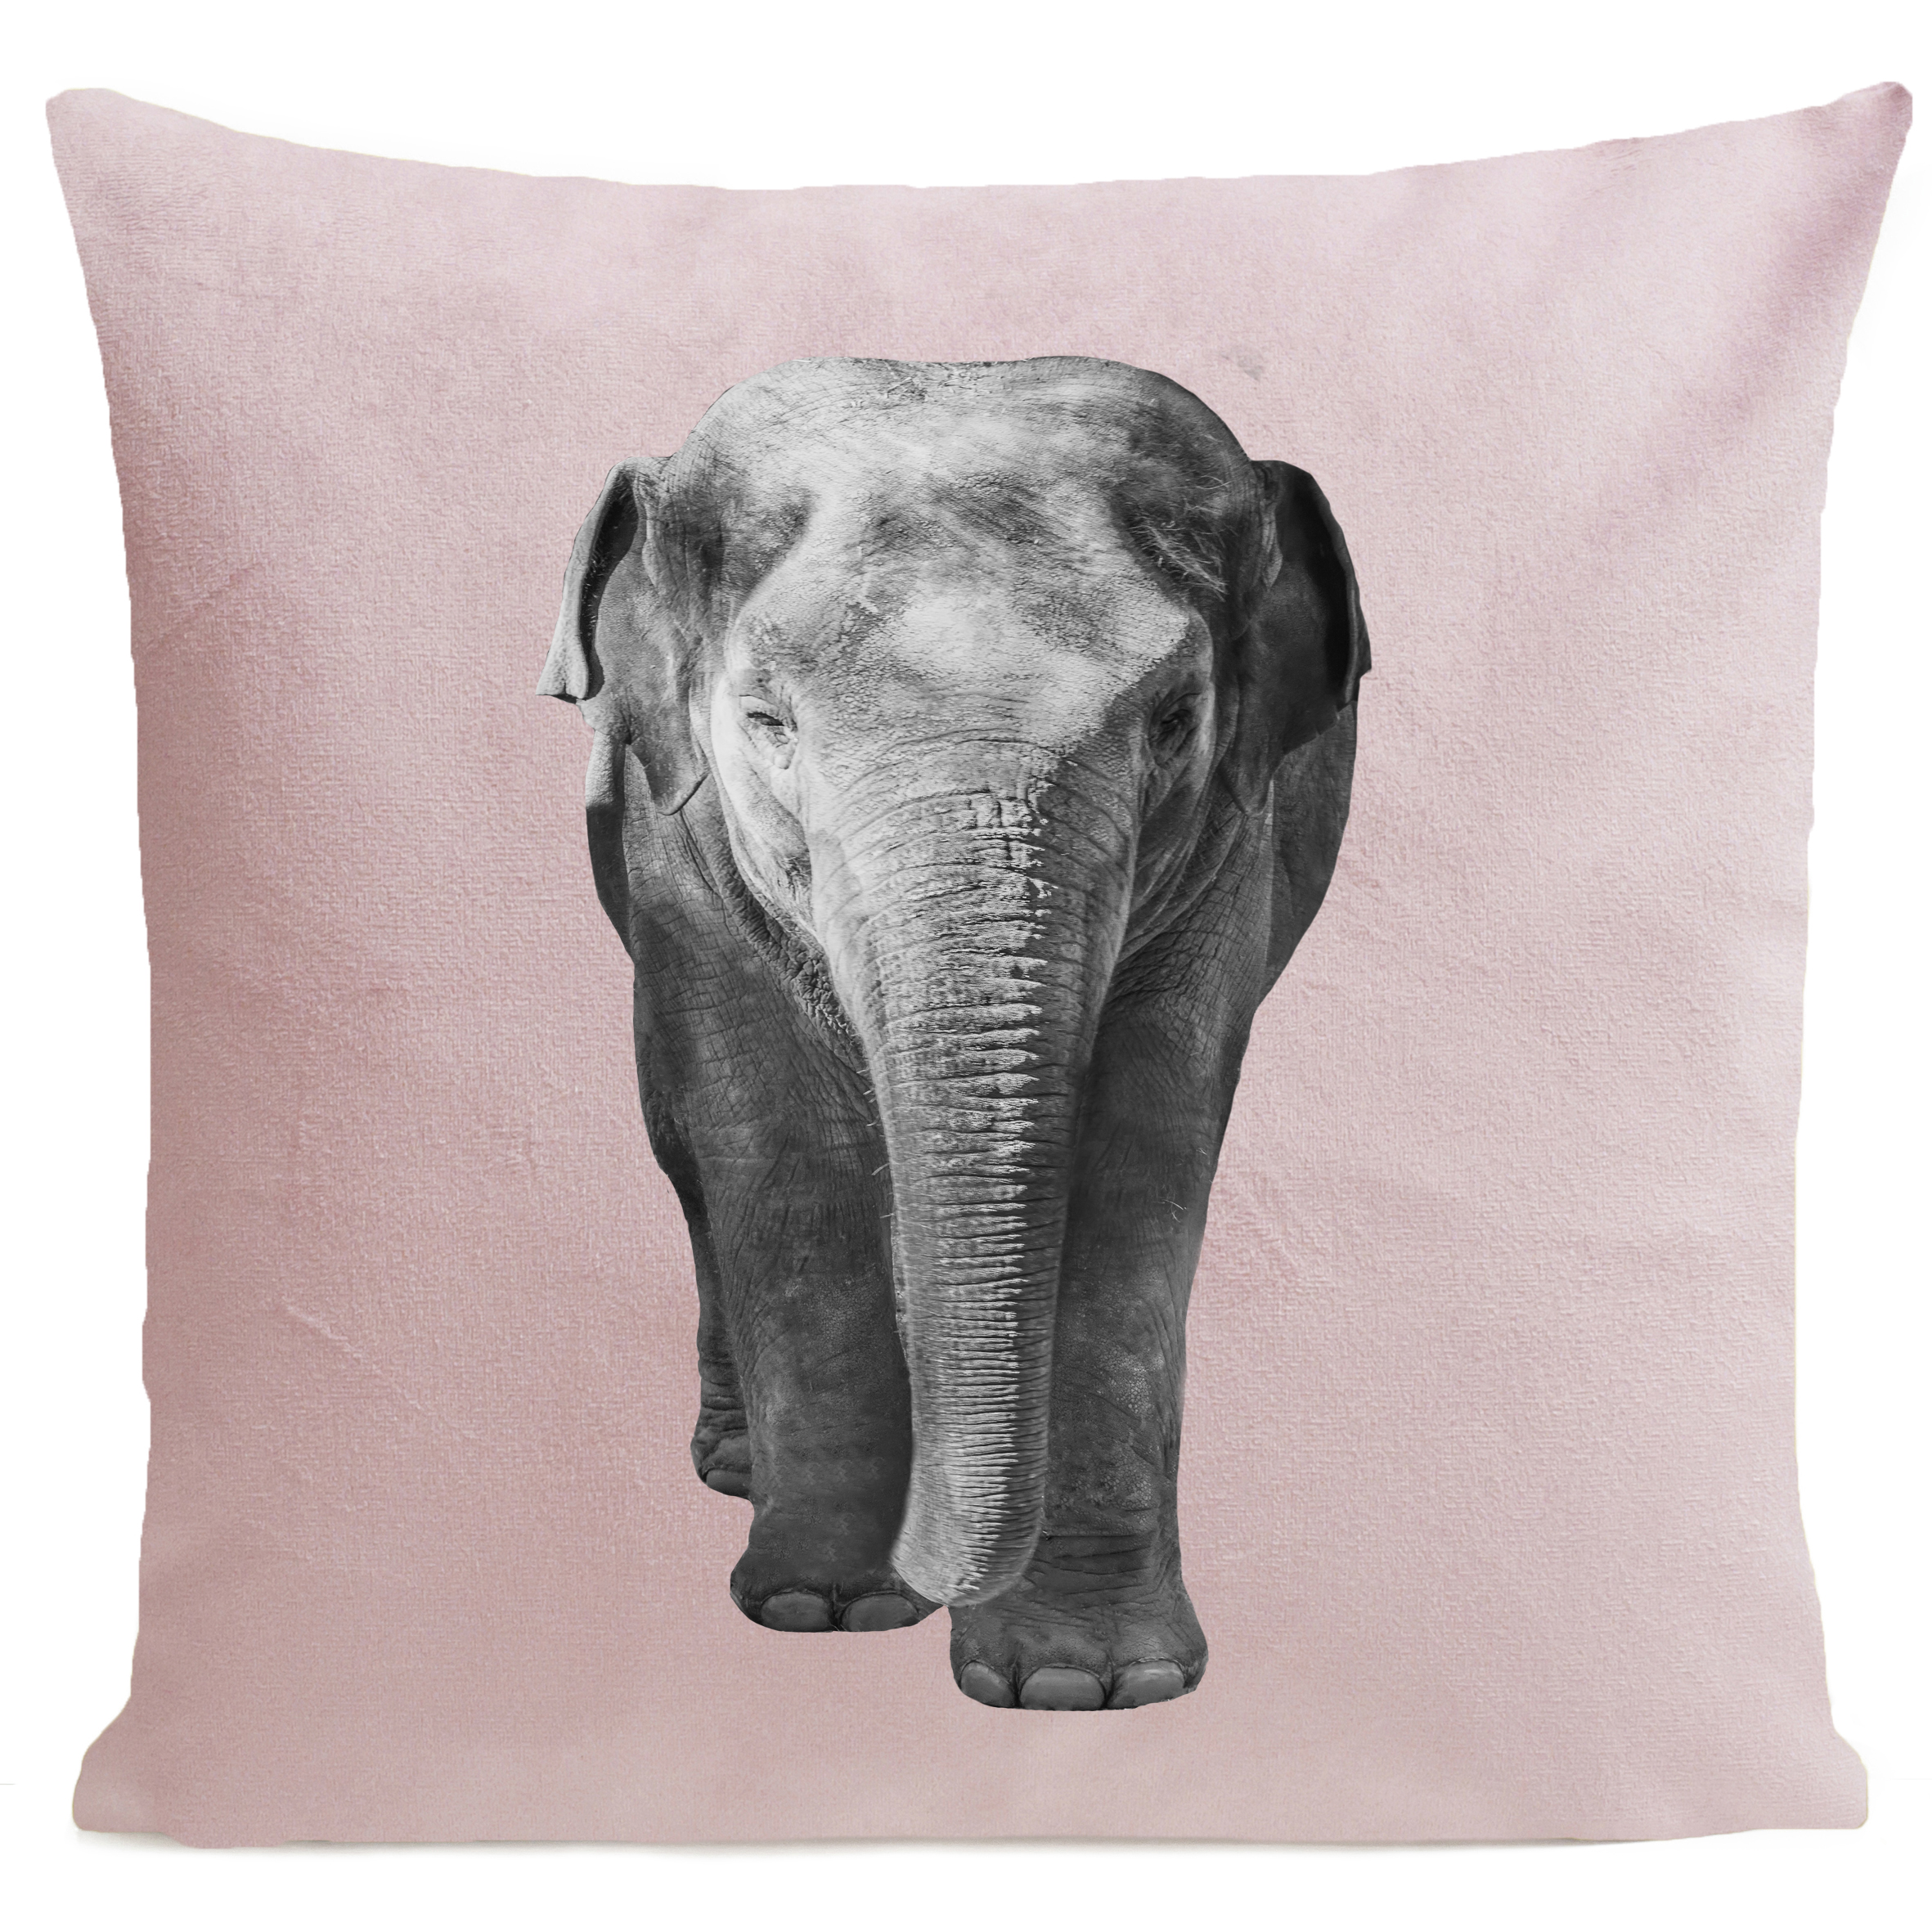 coussin-elephant-rose-pastel